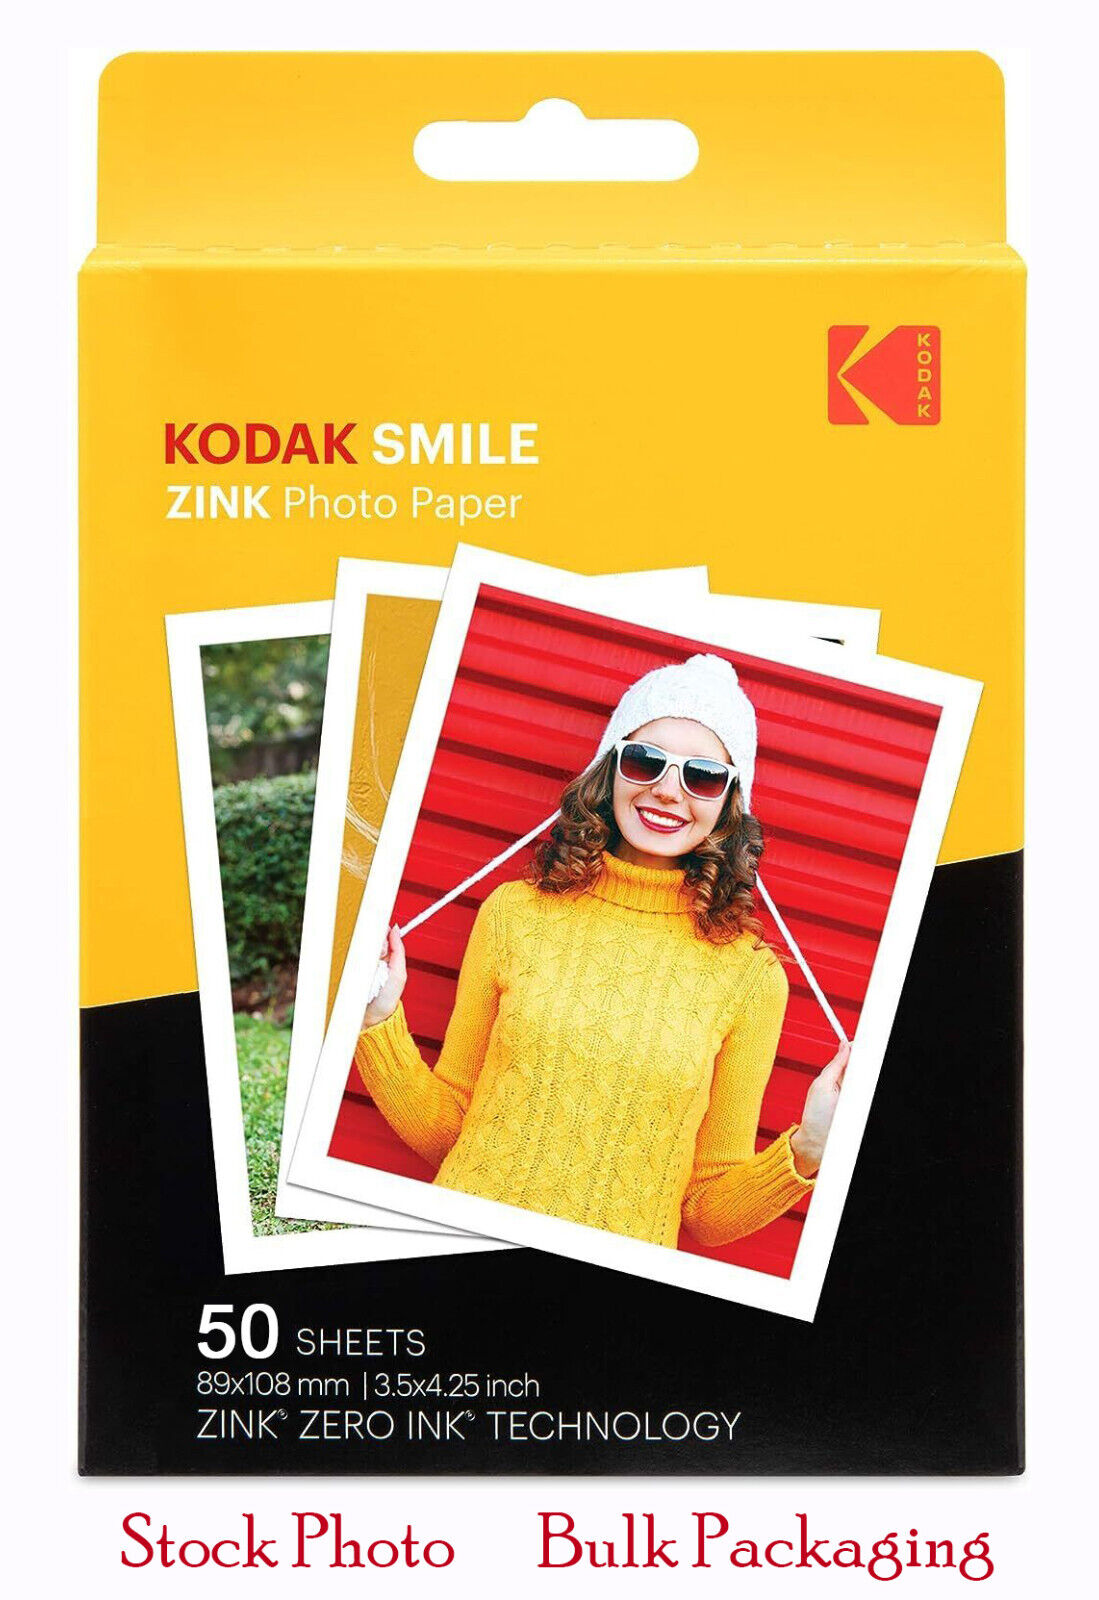 Kodak 3.5x4.25” Premium Zink Photo Paper, 50 Sheets, Bulk Packaging, Sticky Back